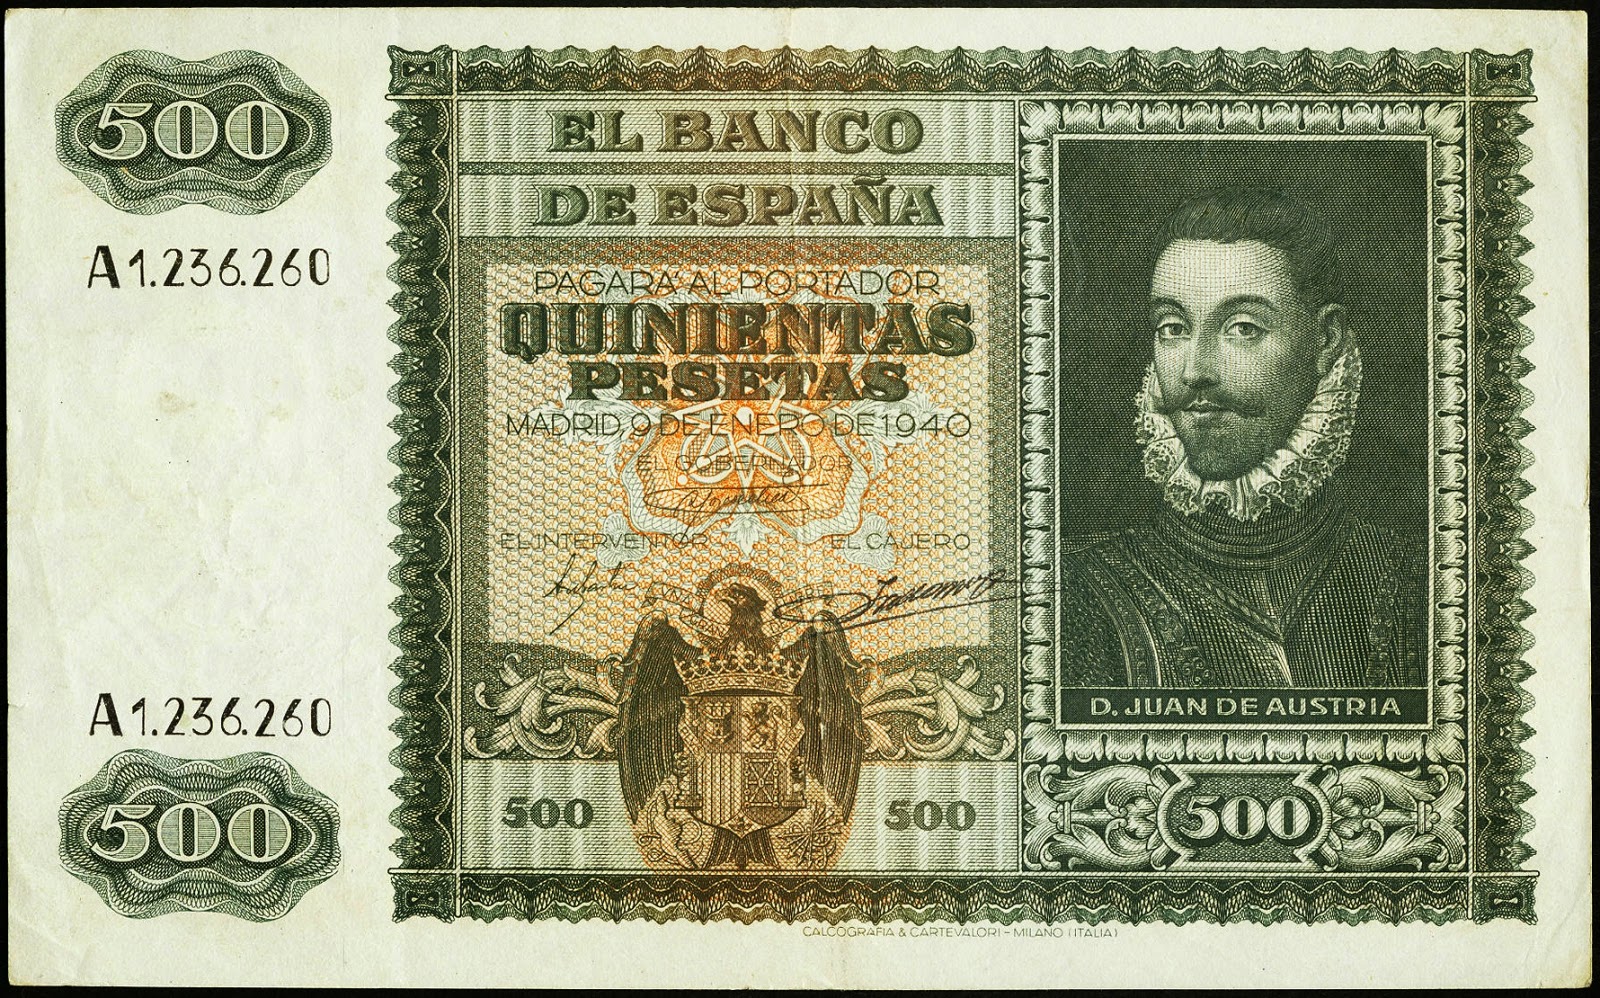 Spain Banknotes 500 Pesetas banknote 1940 Don Juan de Austria